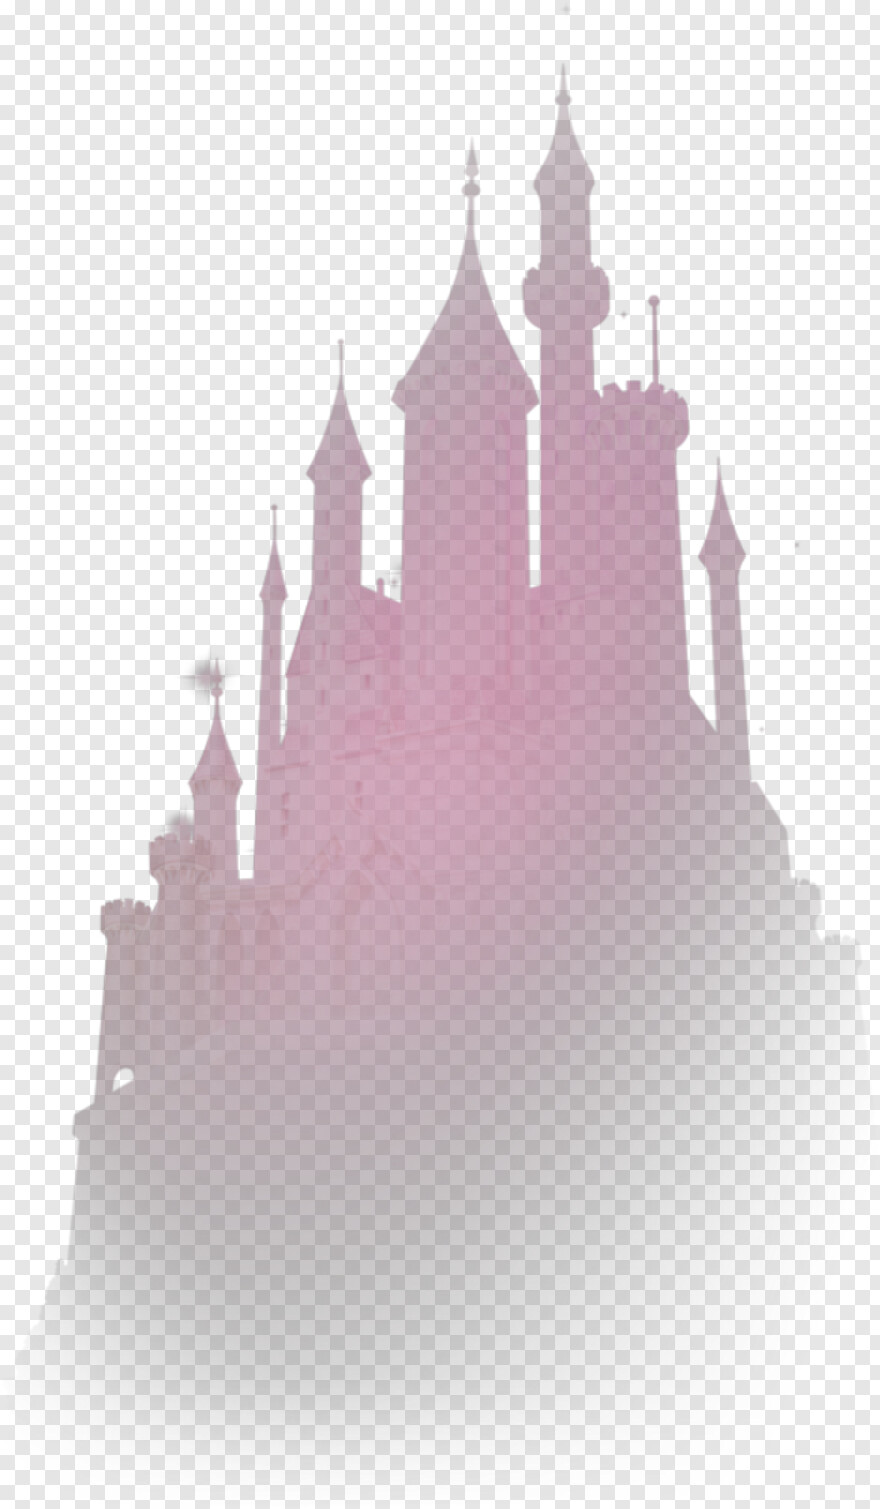 disney-castle-logo # 1051684